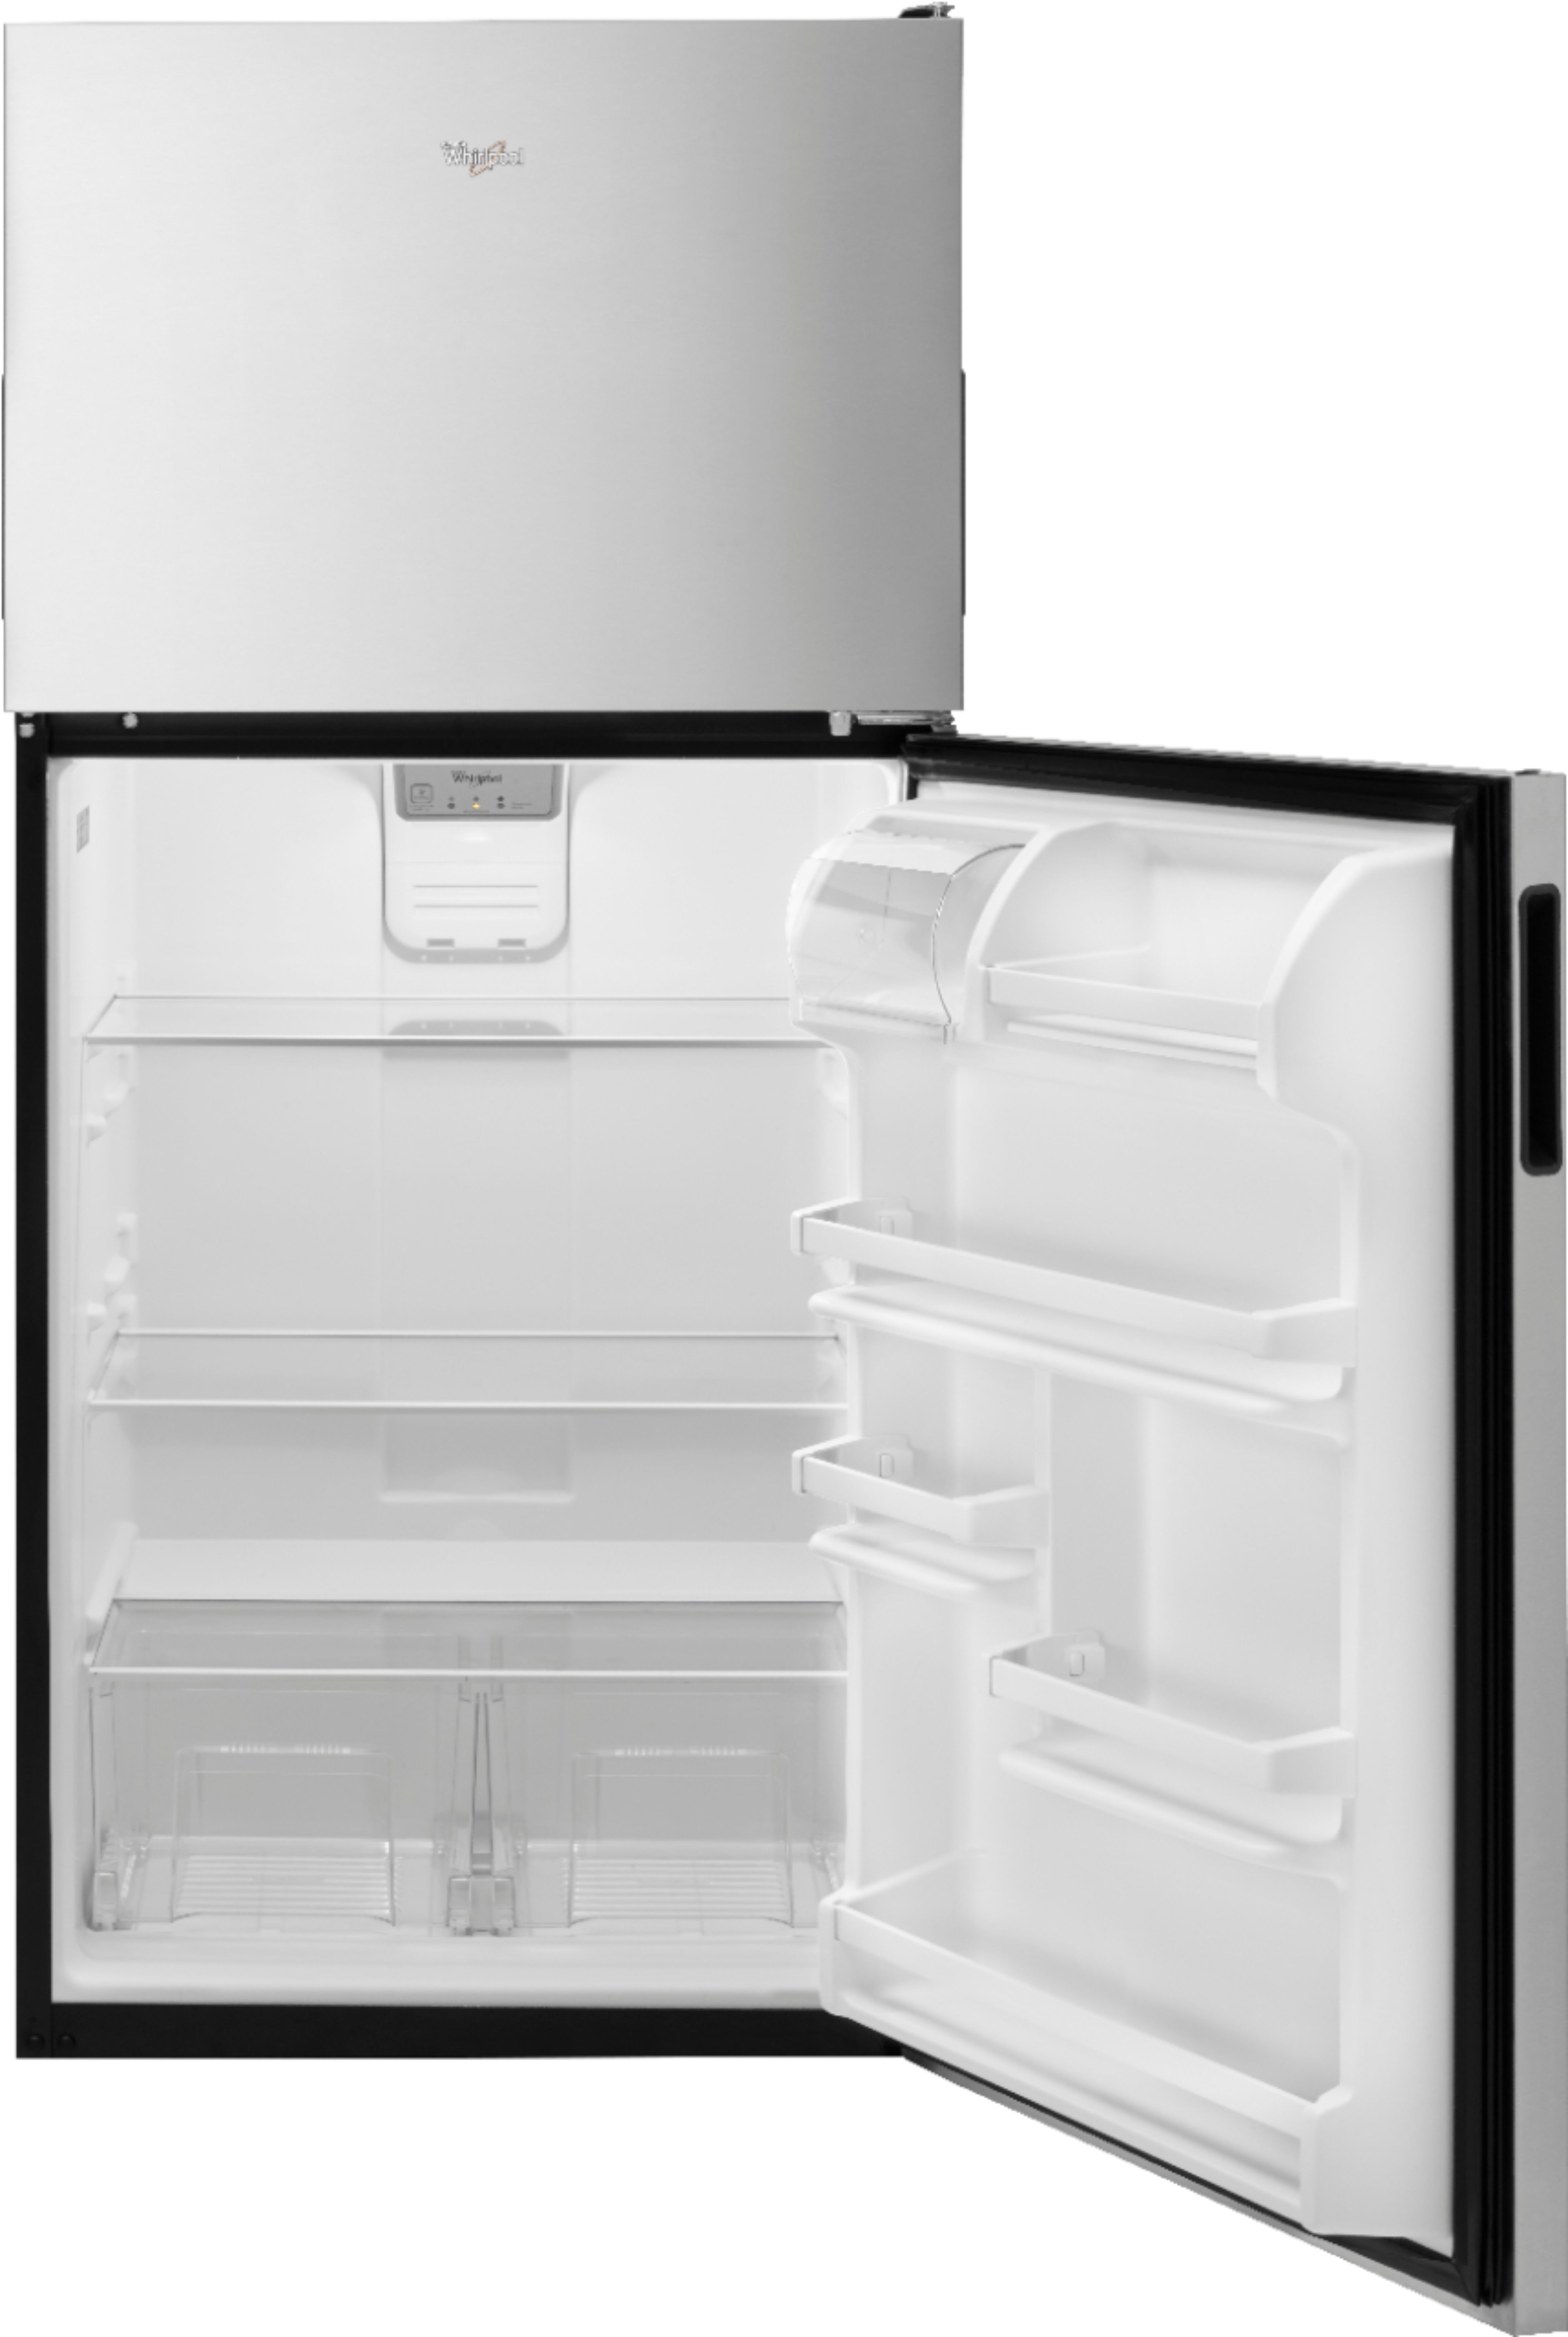 Whirlpool 18.2 Cu. Ft. Top-Freezer Refrigerator Stainless steel Whirlpool Stainless Steel Refrigerator Top Freezer